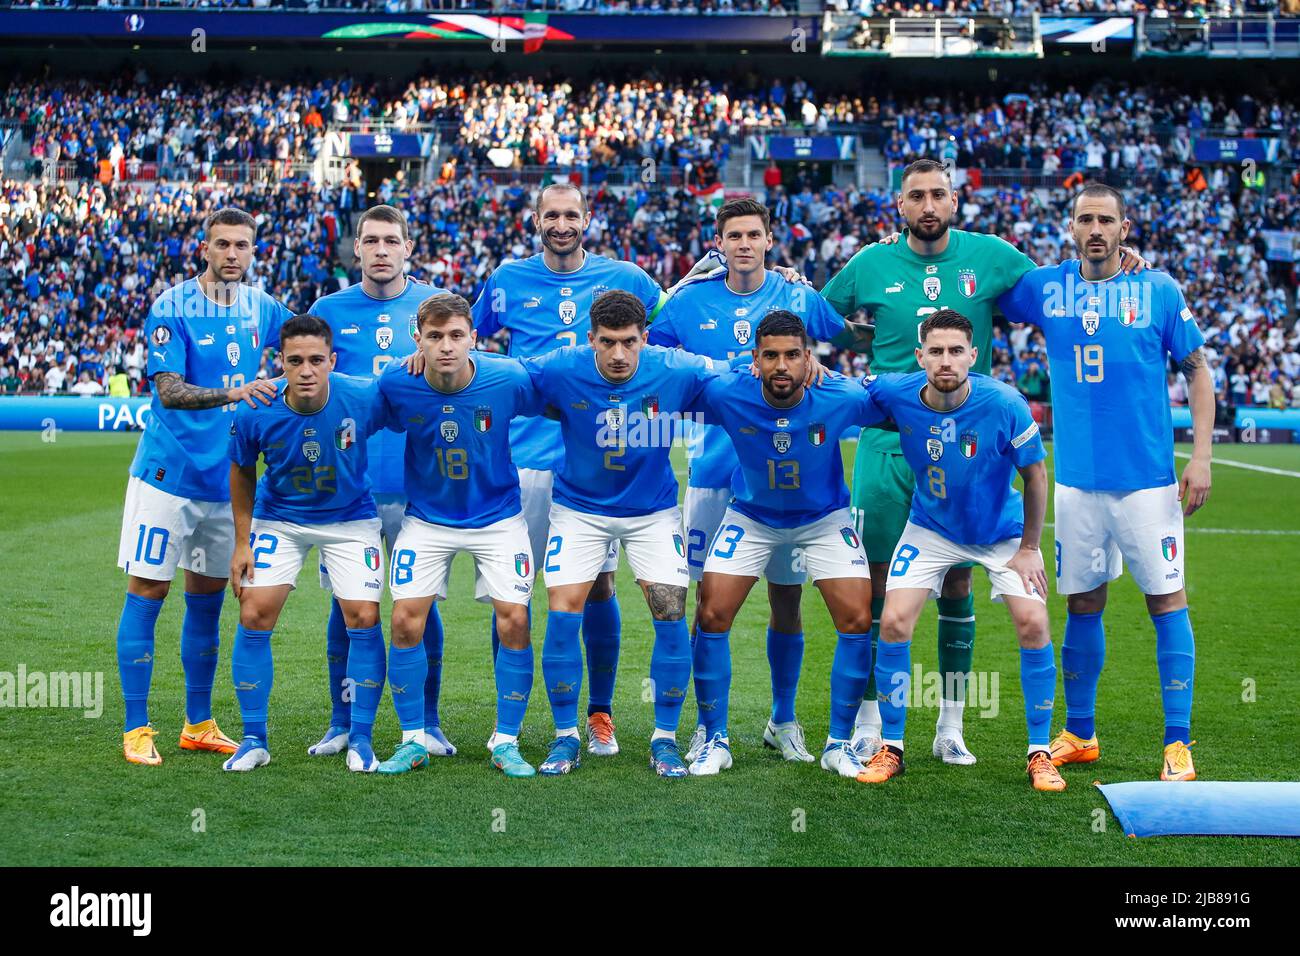 Nazionale italiana di calcio hi-res stock photography and images - Alamy